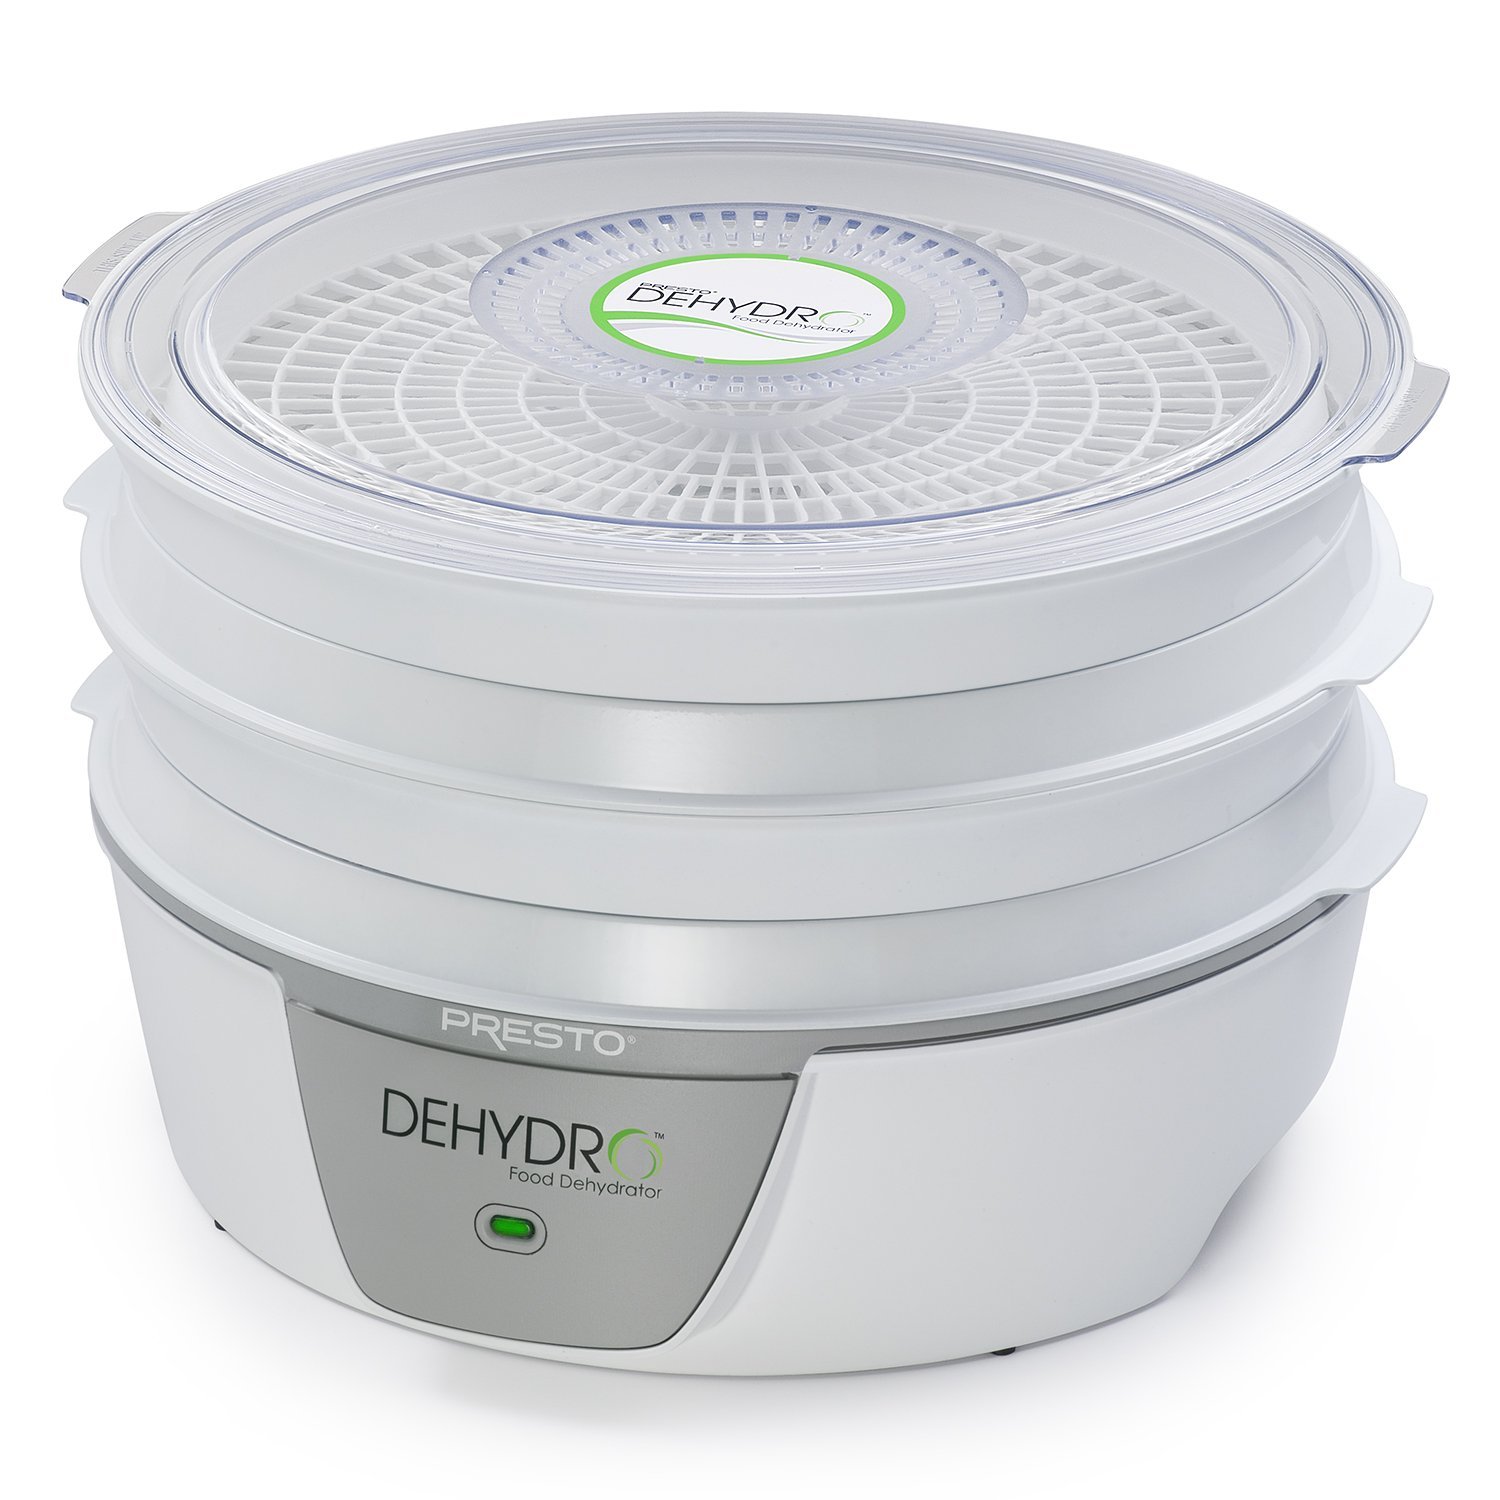 Presto Dehydro Electric Food Dehydrator – Just $33.00!